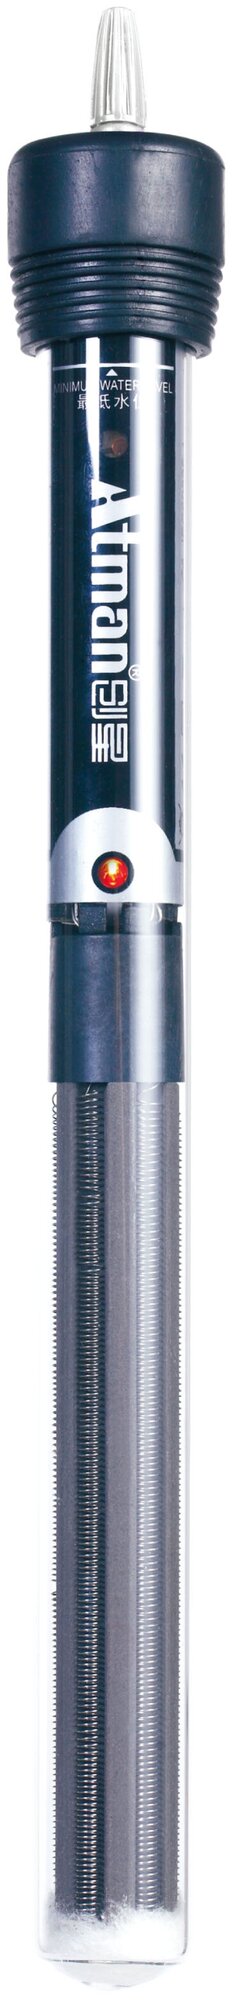 Нагреватель Atman Galaxy 200 Вт для аквариумов объемом до 200 л (1 шт)